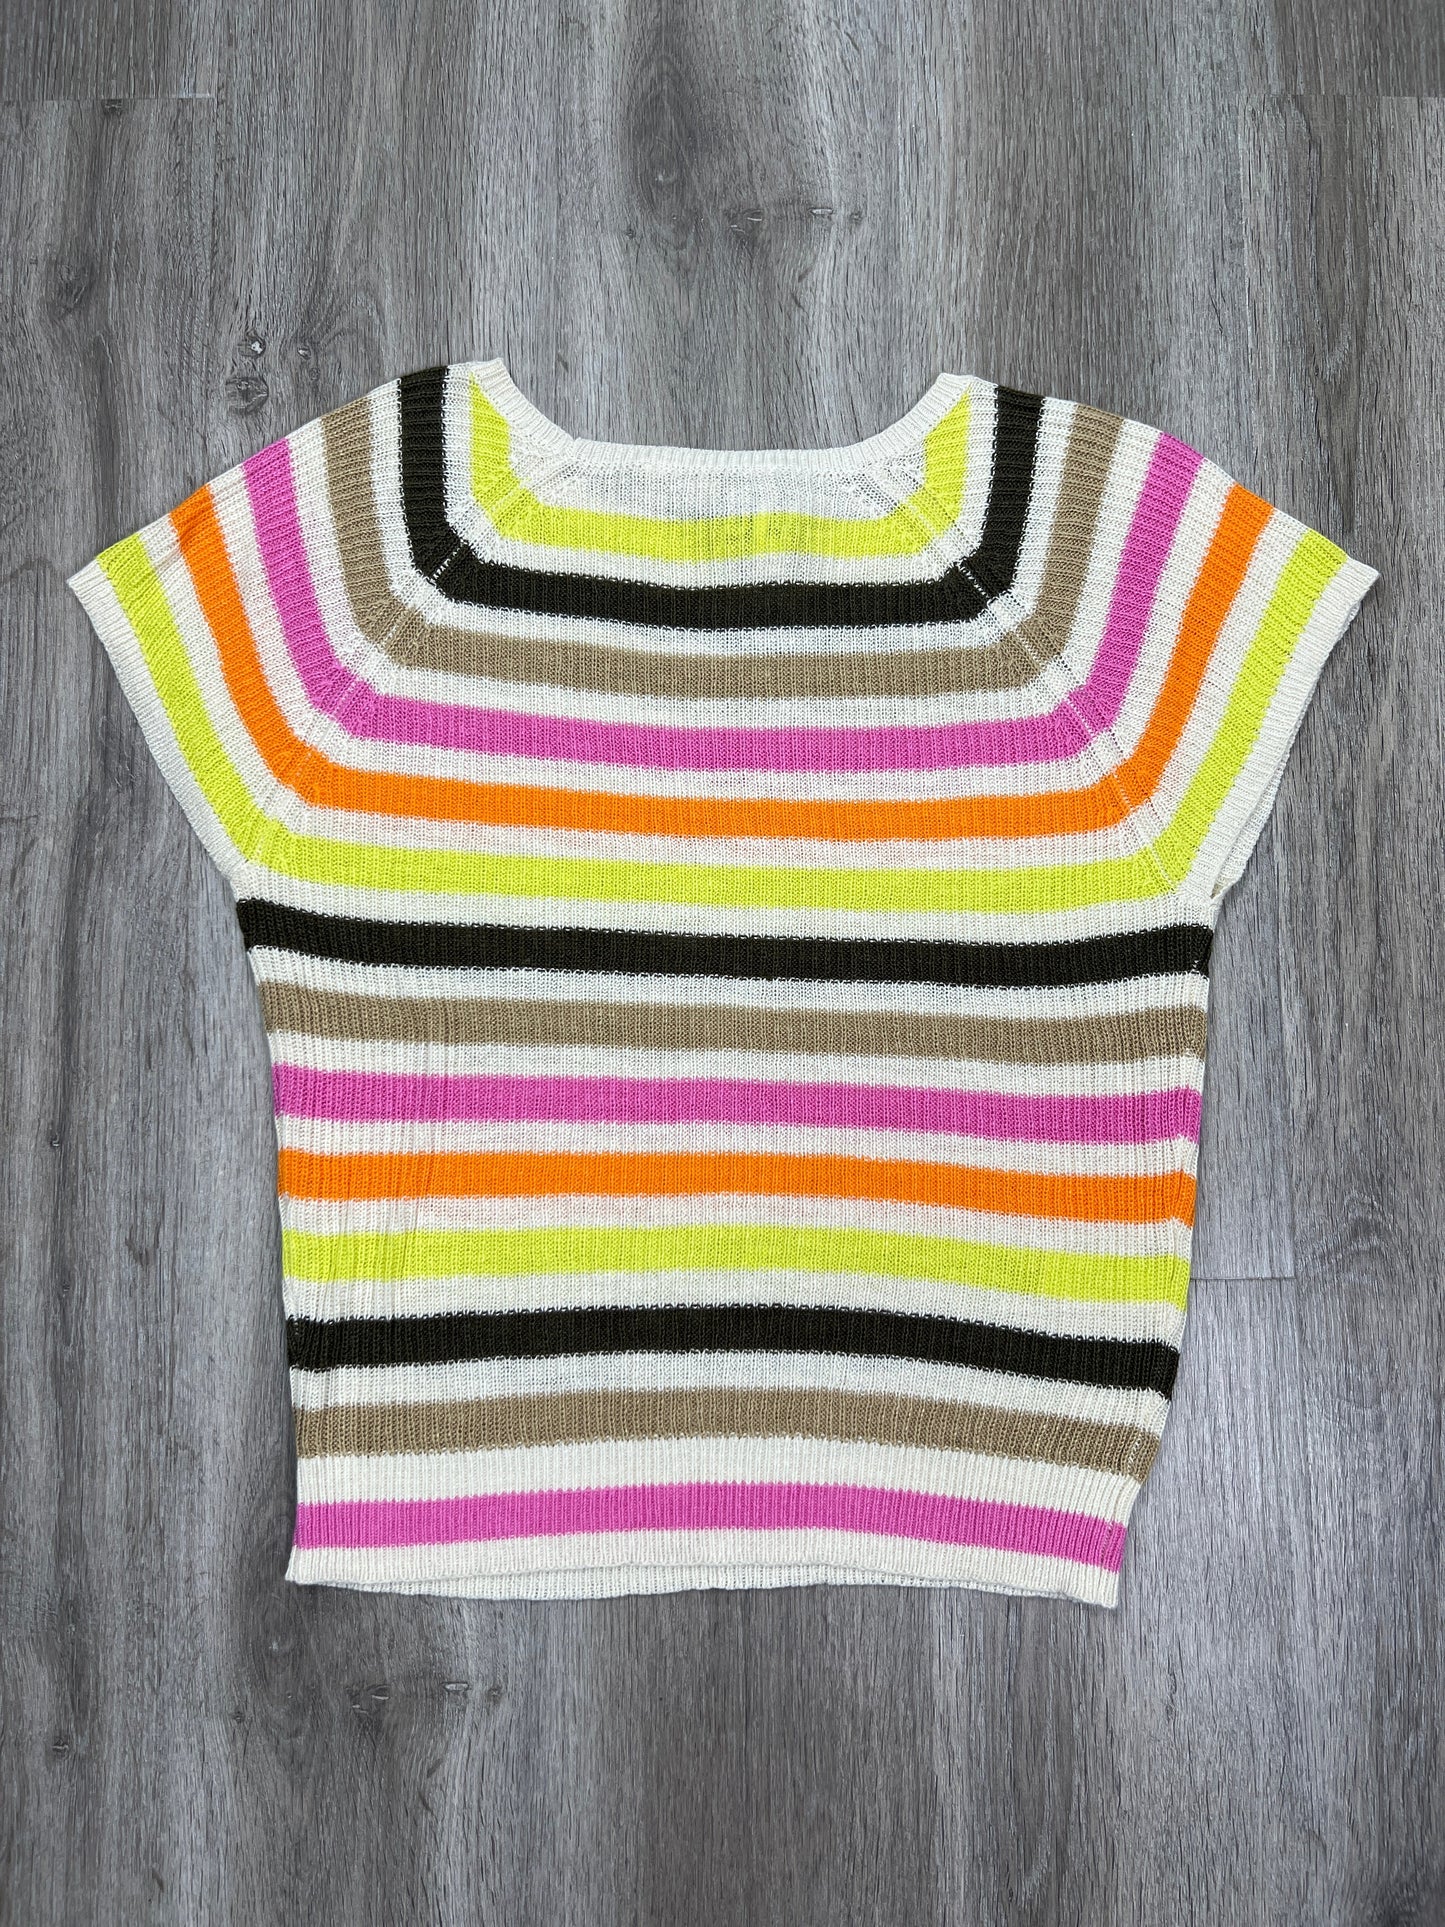 Tan Sweater Short Sleeve Loft, Size S